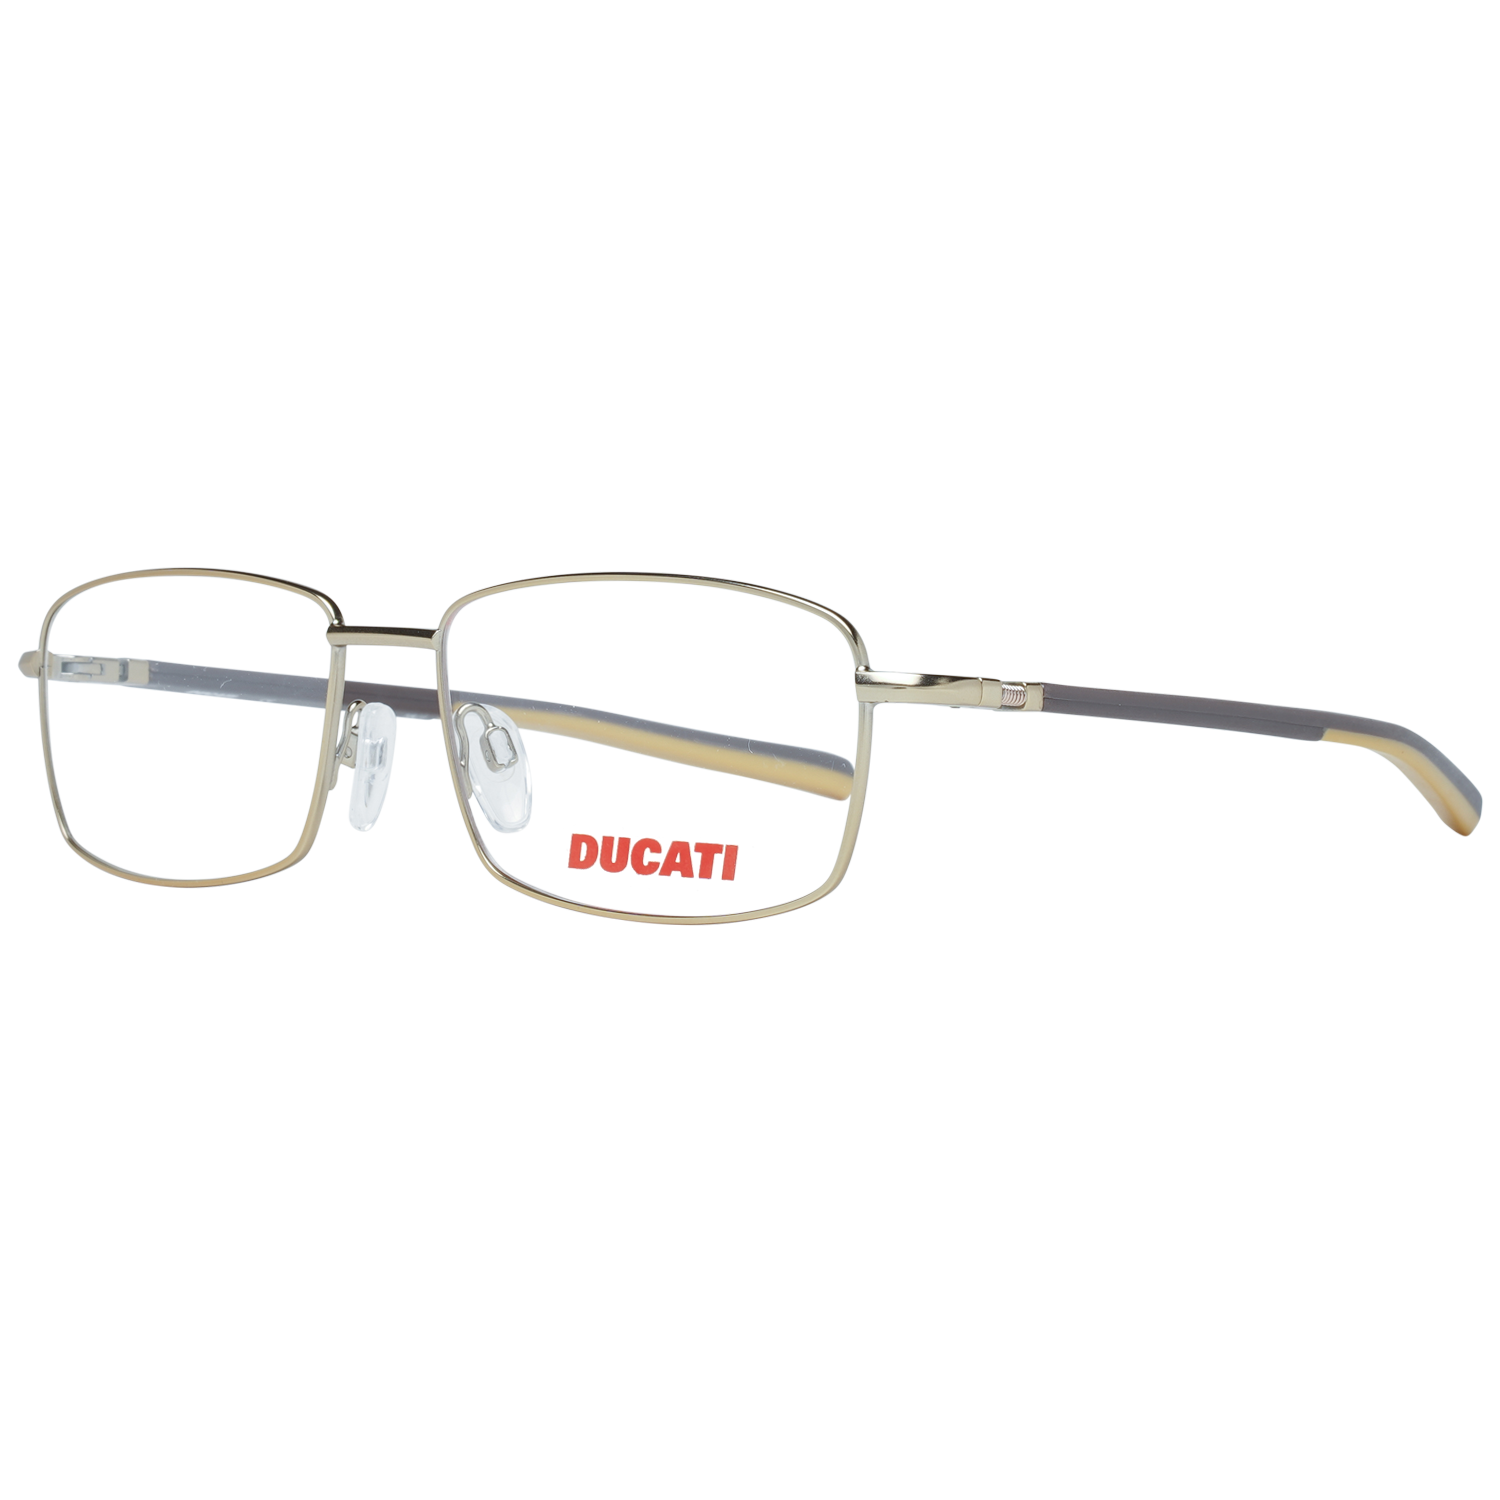 Ducati Frames Ducati Optical Frame DA3002 400 55 Eyeglasses Eyewear UK USA Australia 